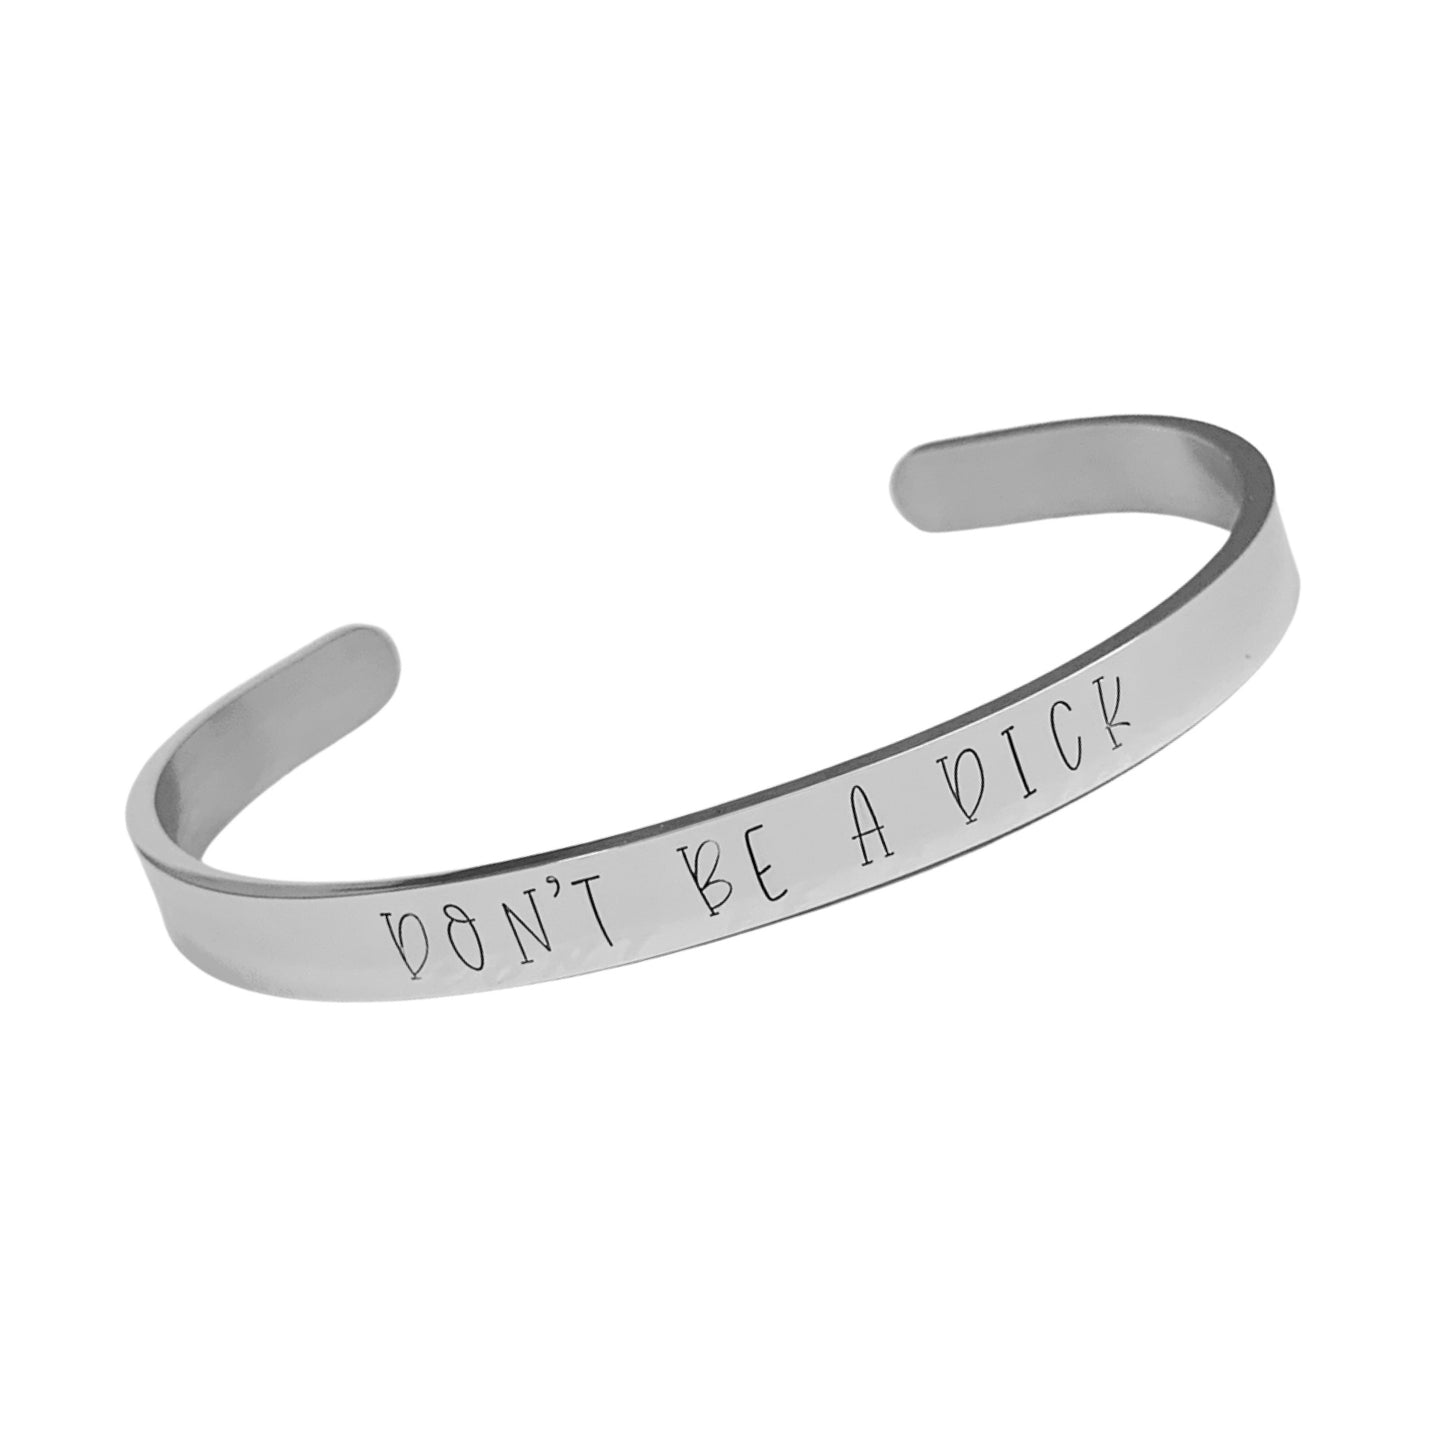 Don't Be a Dick - Cuff Bracelet